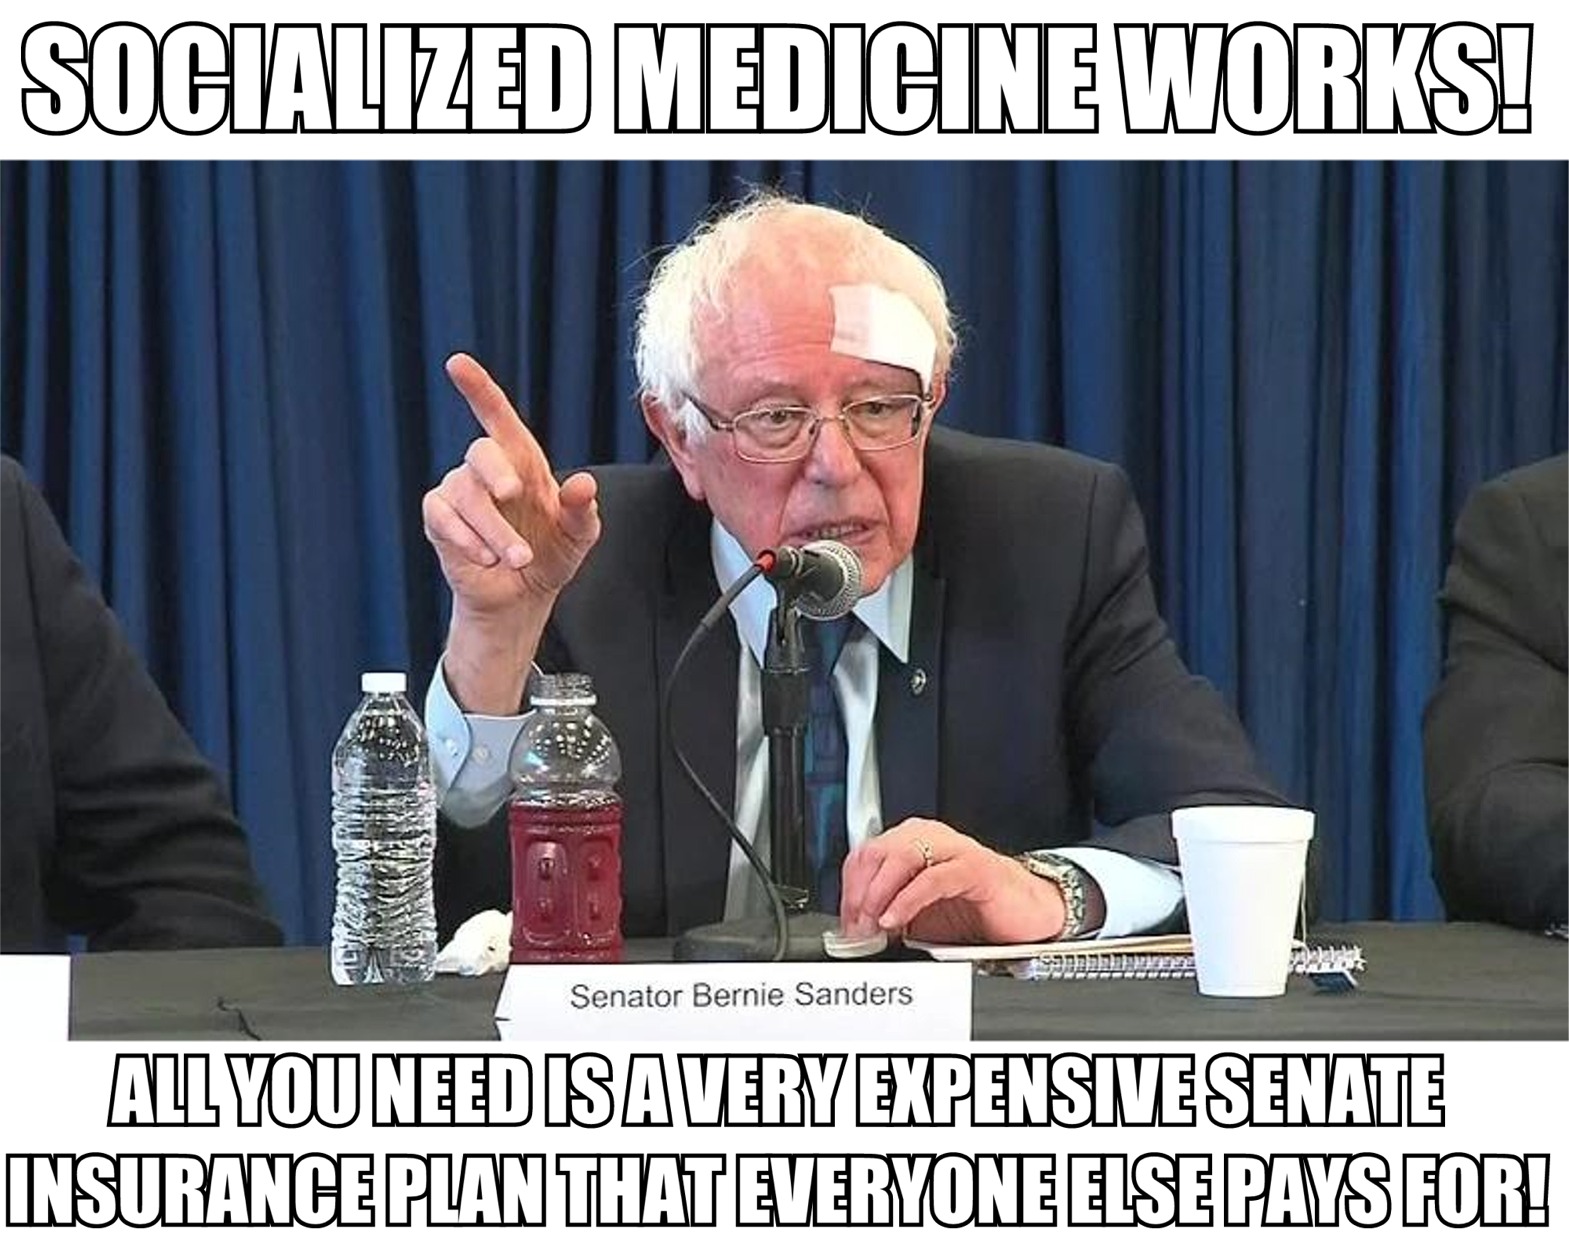 bernie sanders crazy - Socialized Medicine Works! Sode Senator Bernie Sanders All You Need Is Avery Expensive Senate Insurance Plan That Everyone Else Pays For!